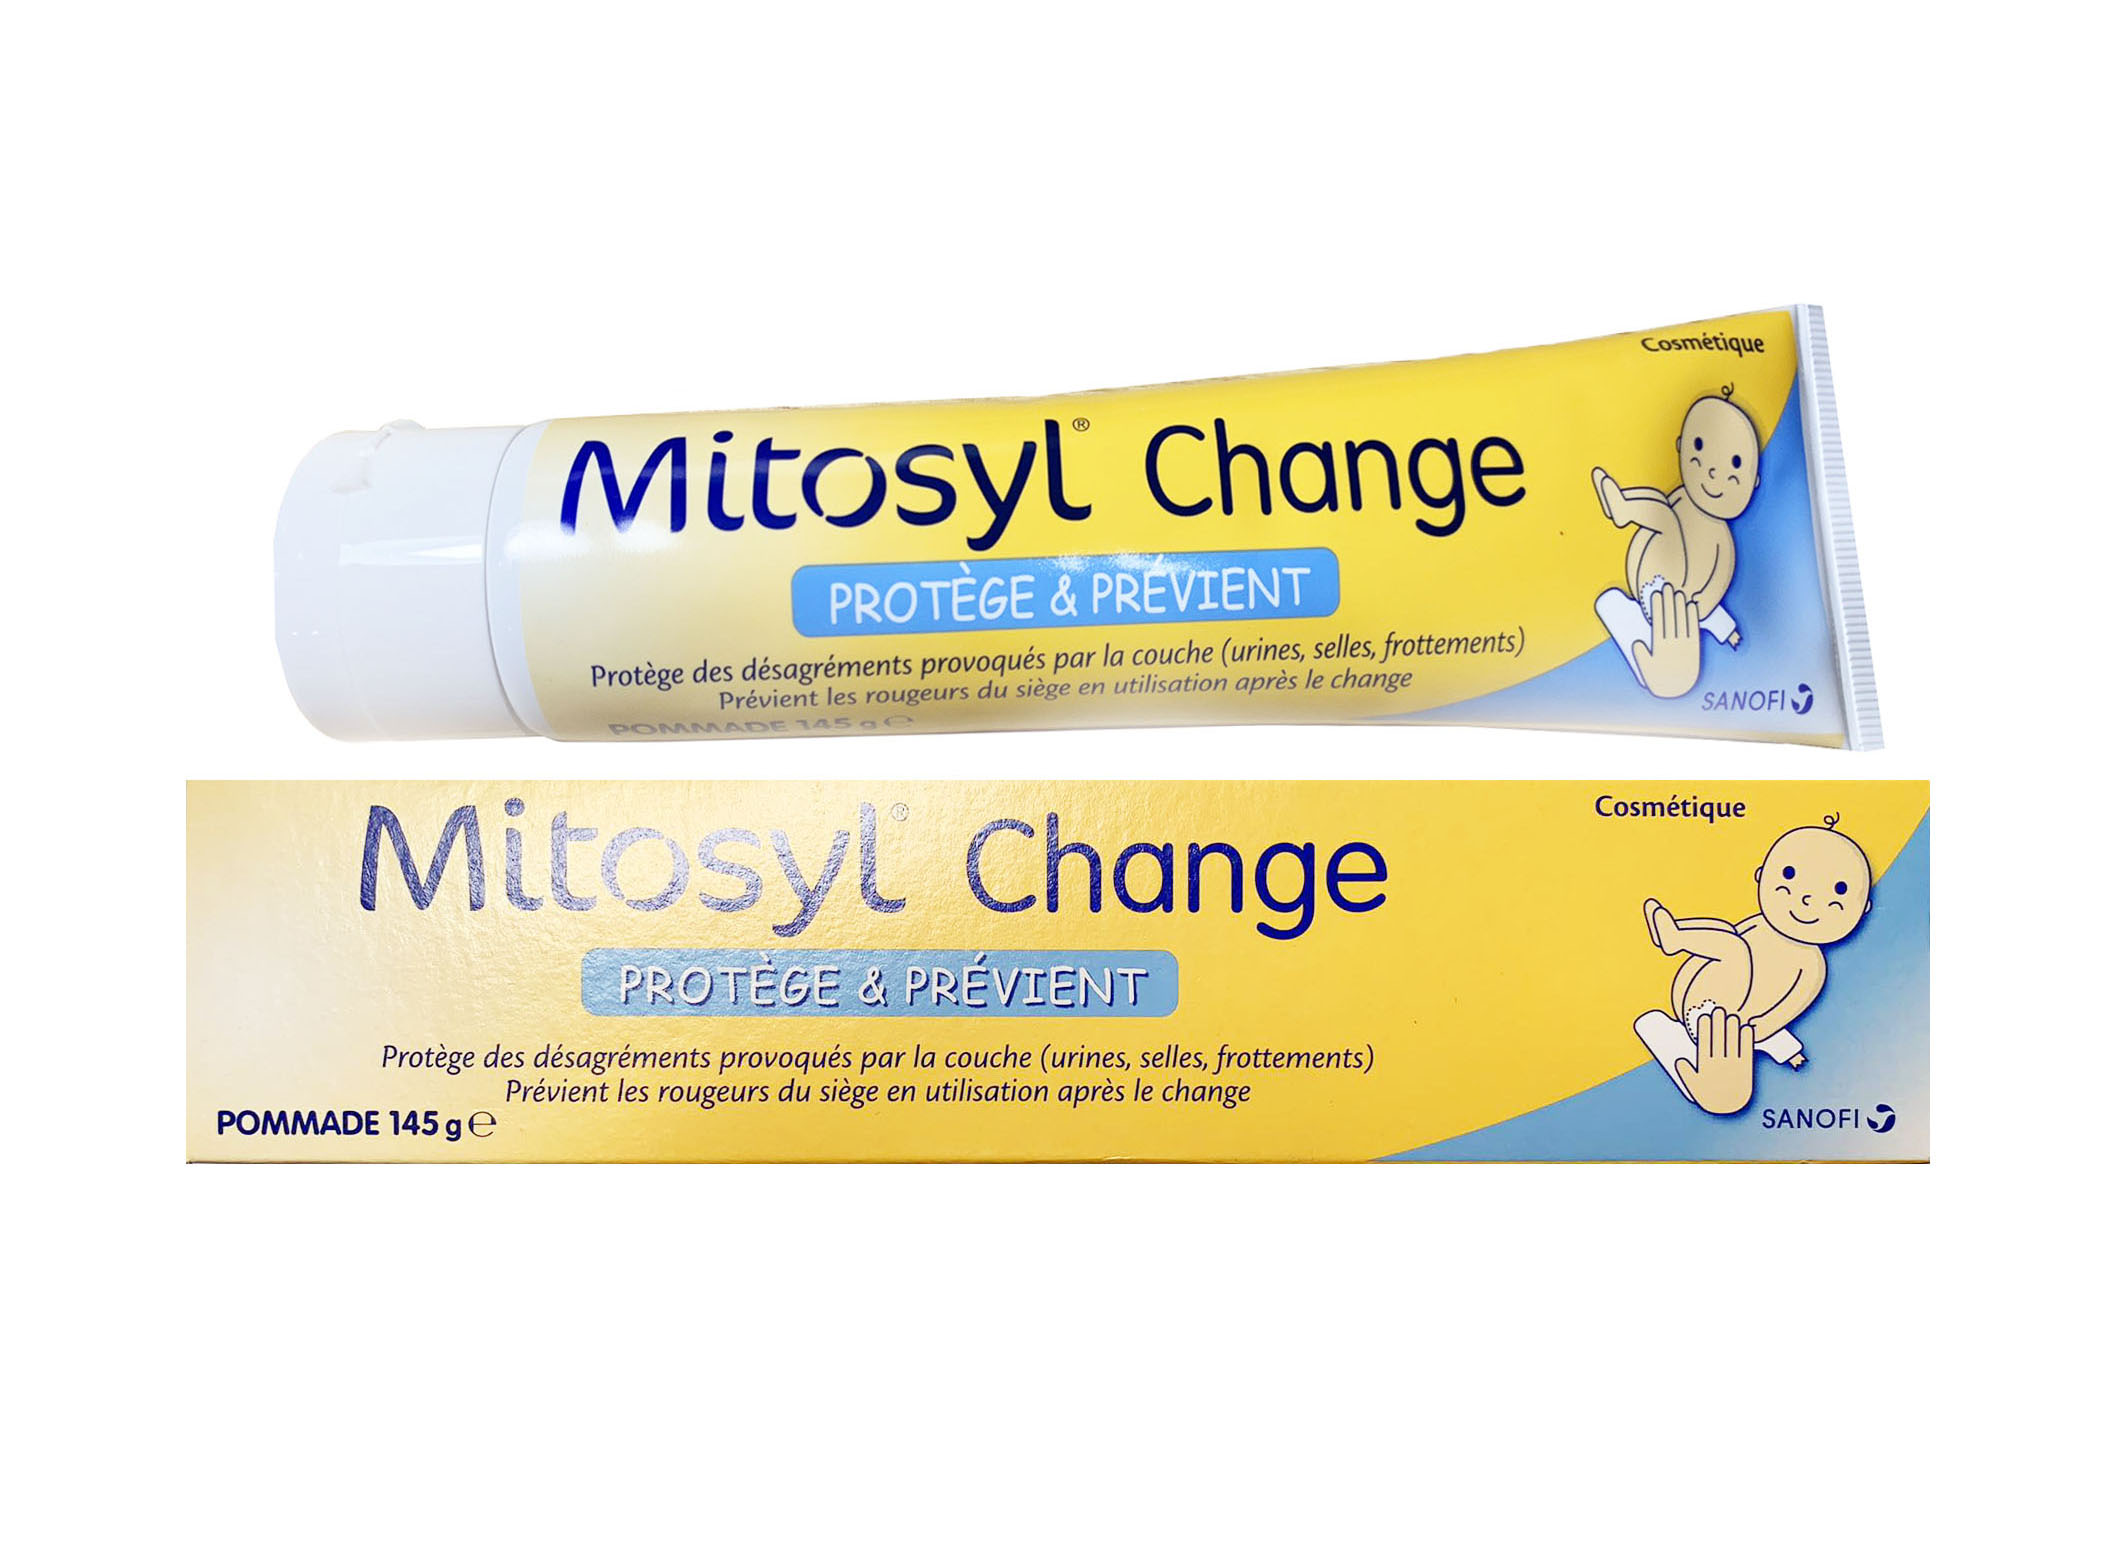 Mitosyl®